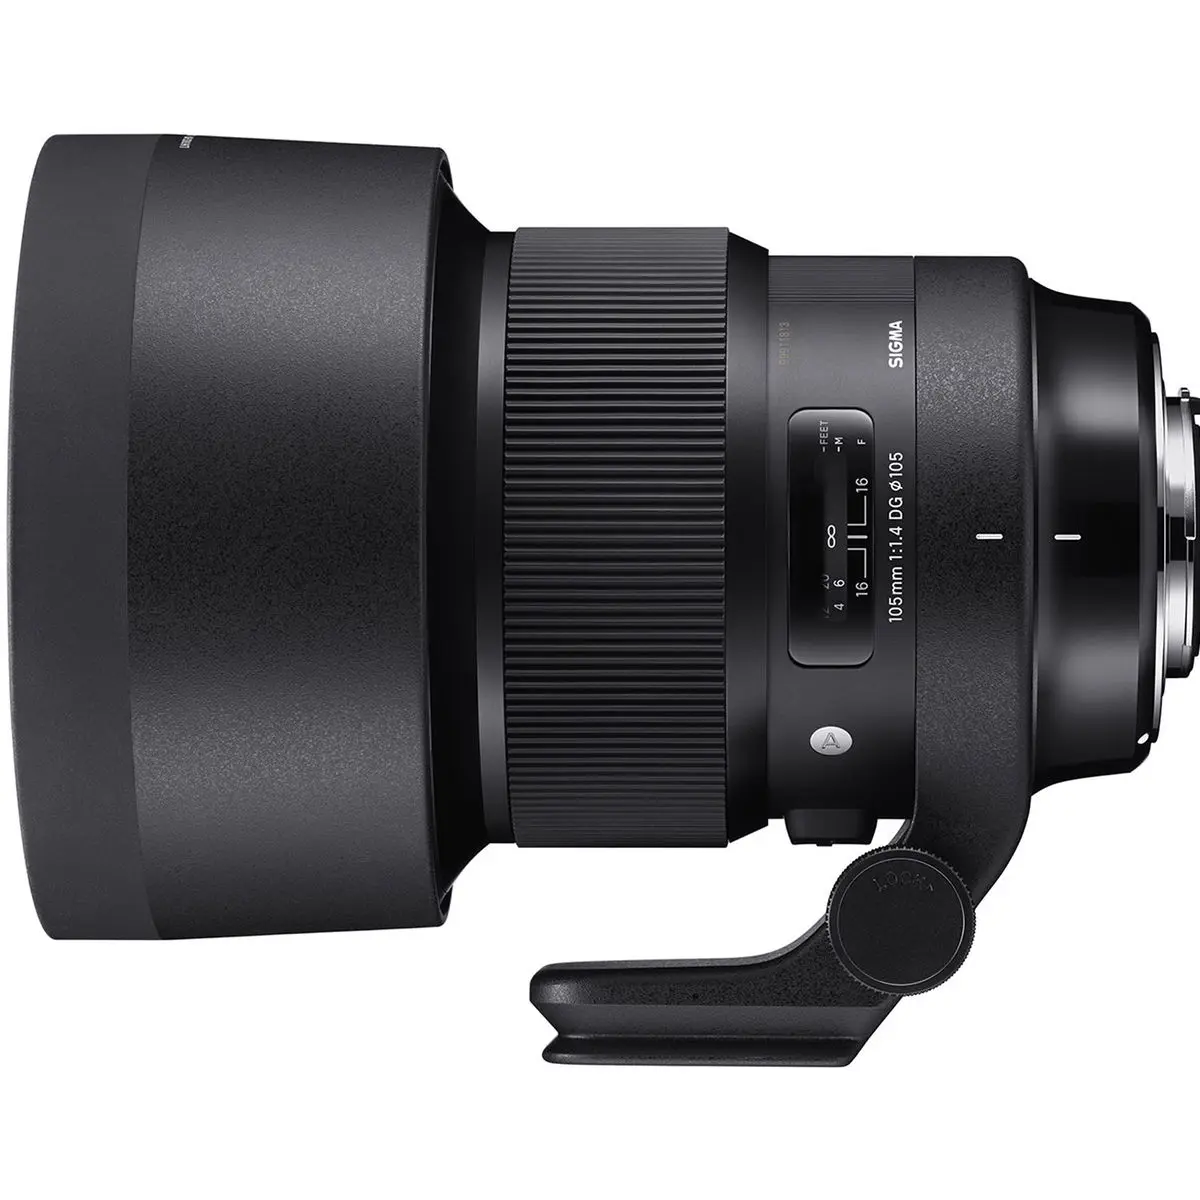 1. Sigma 105mm F1.4 DG HSM | Art (Canon) Lens